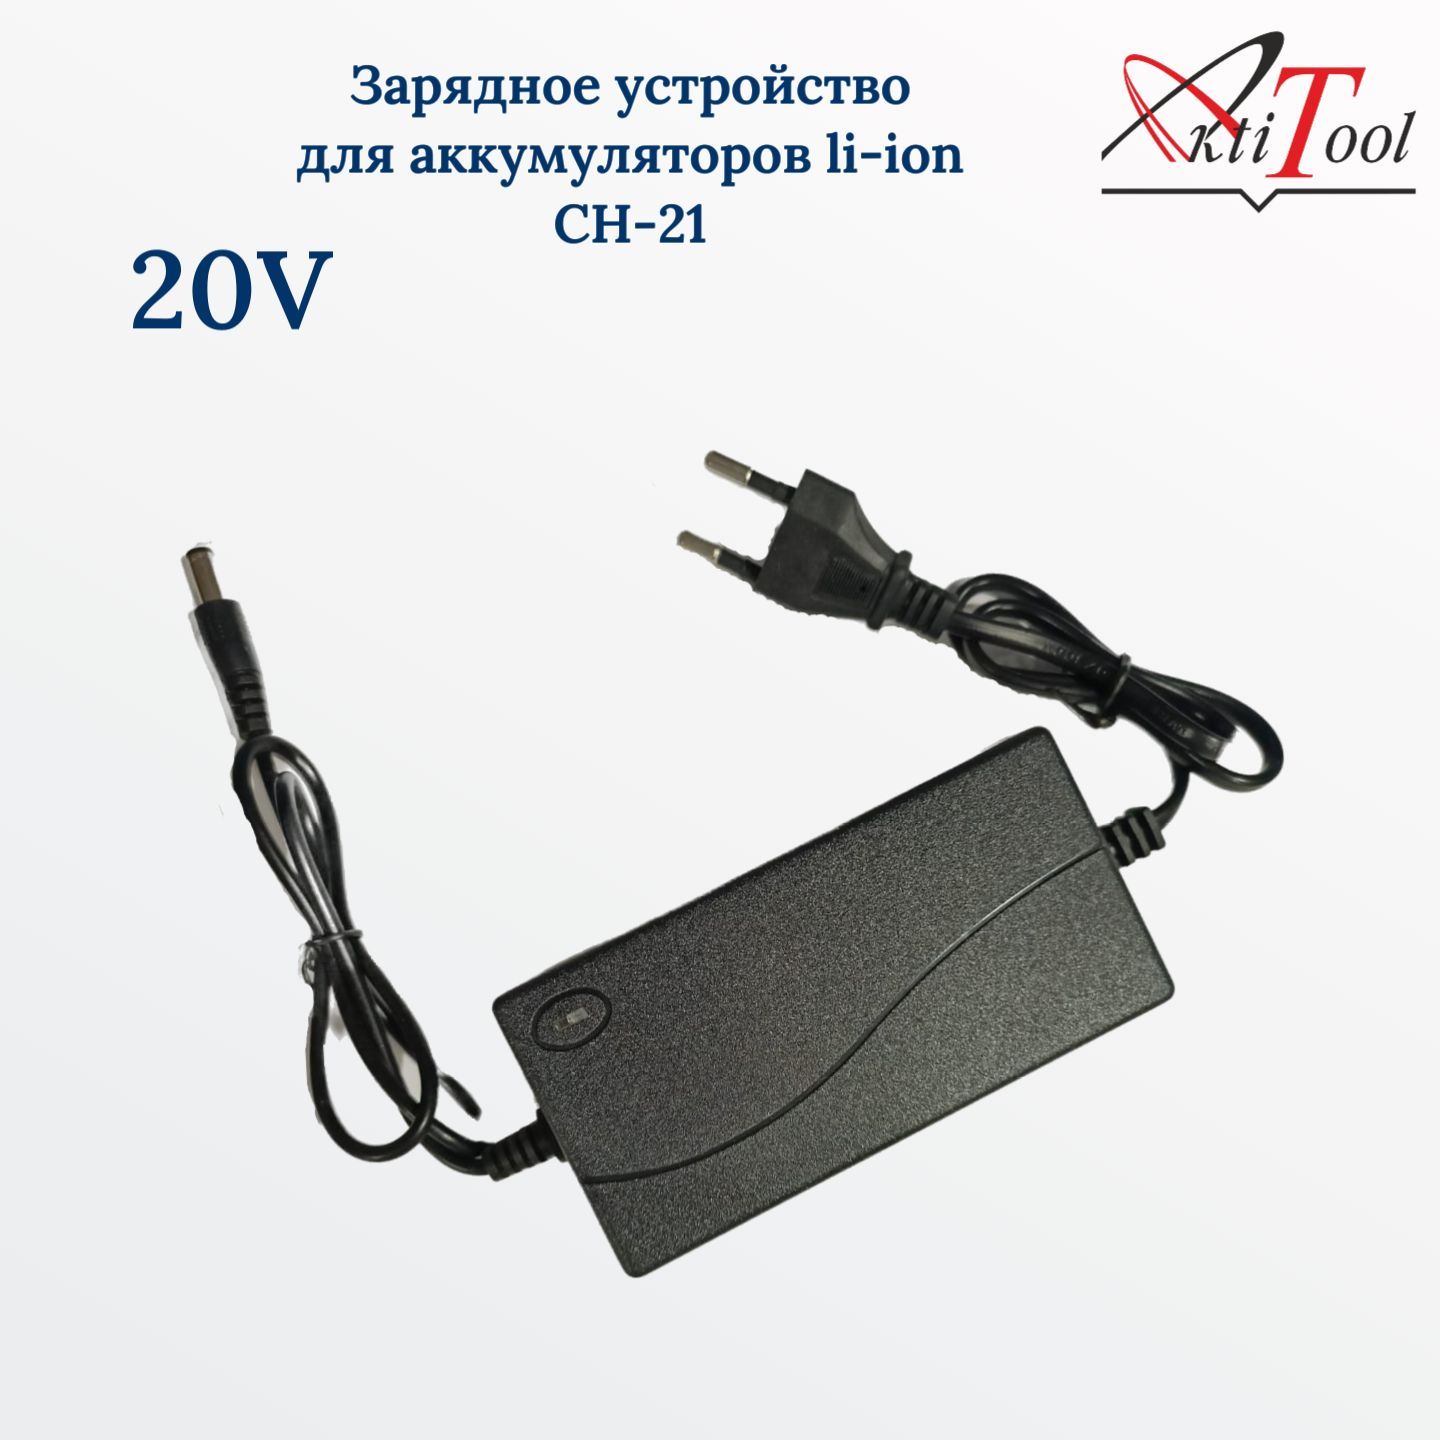 Зарядноеустройстводляаккумуляторовli-ionCH-20(20В)